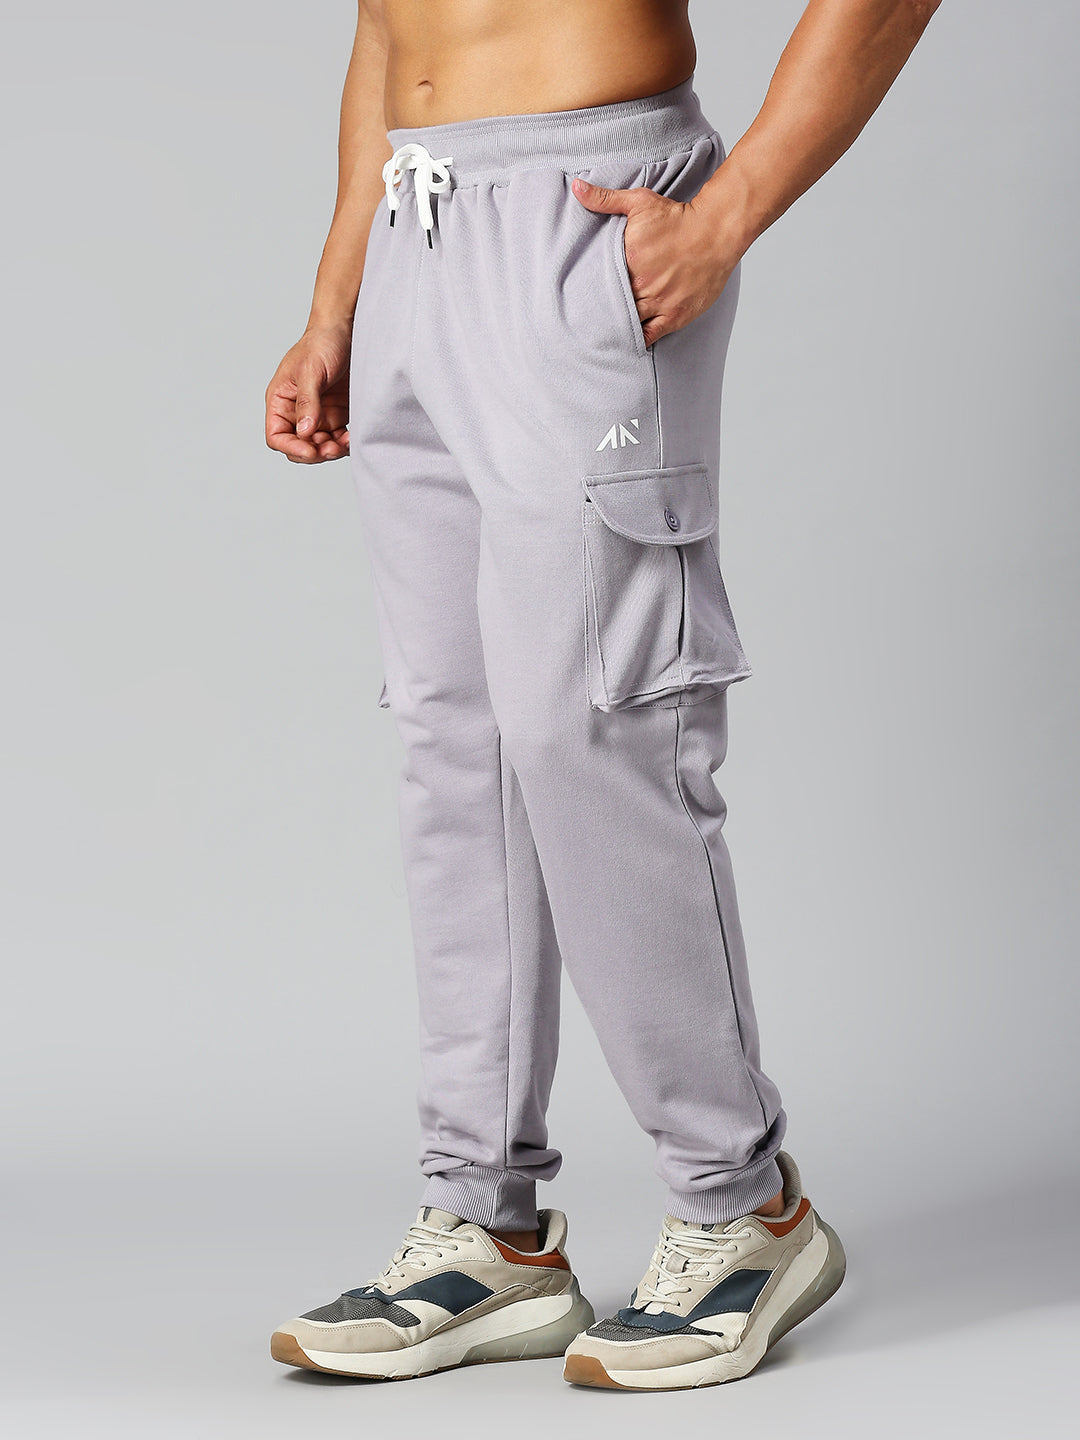 Men Winter Warm Pants Fleece Lined Water Resistant Sweatpants Athletic  Workout | eBay